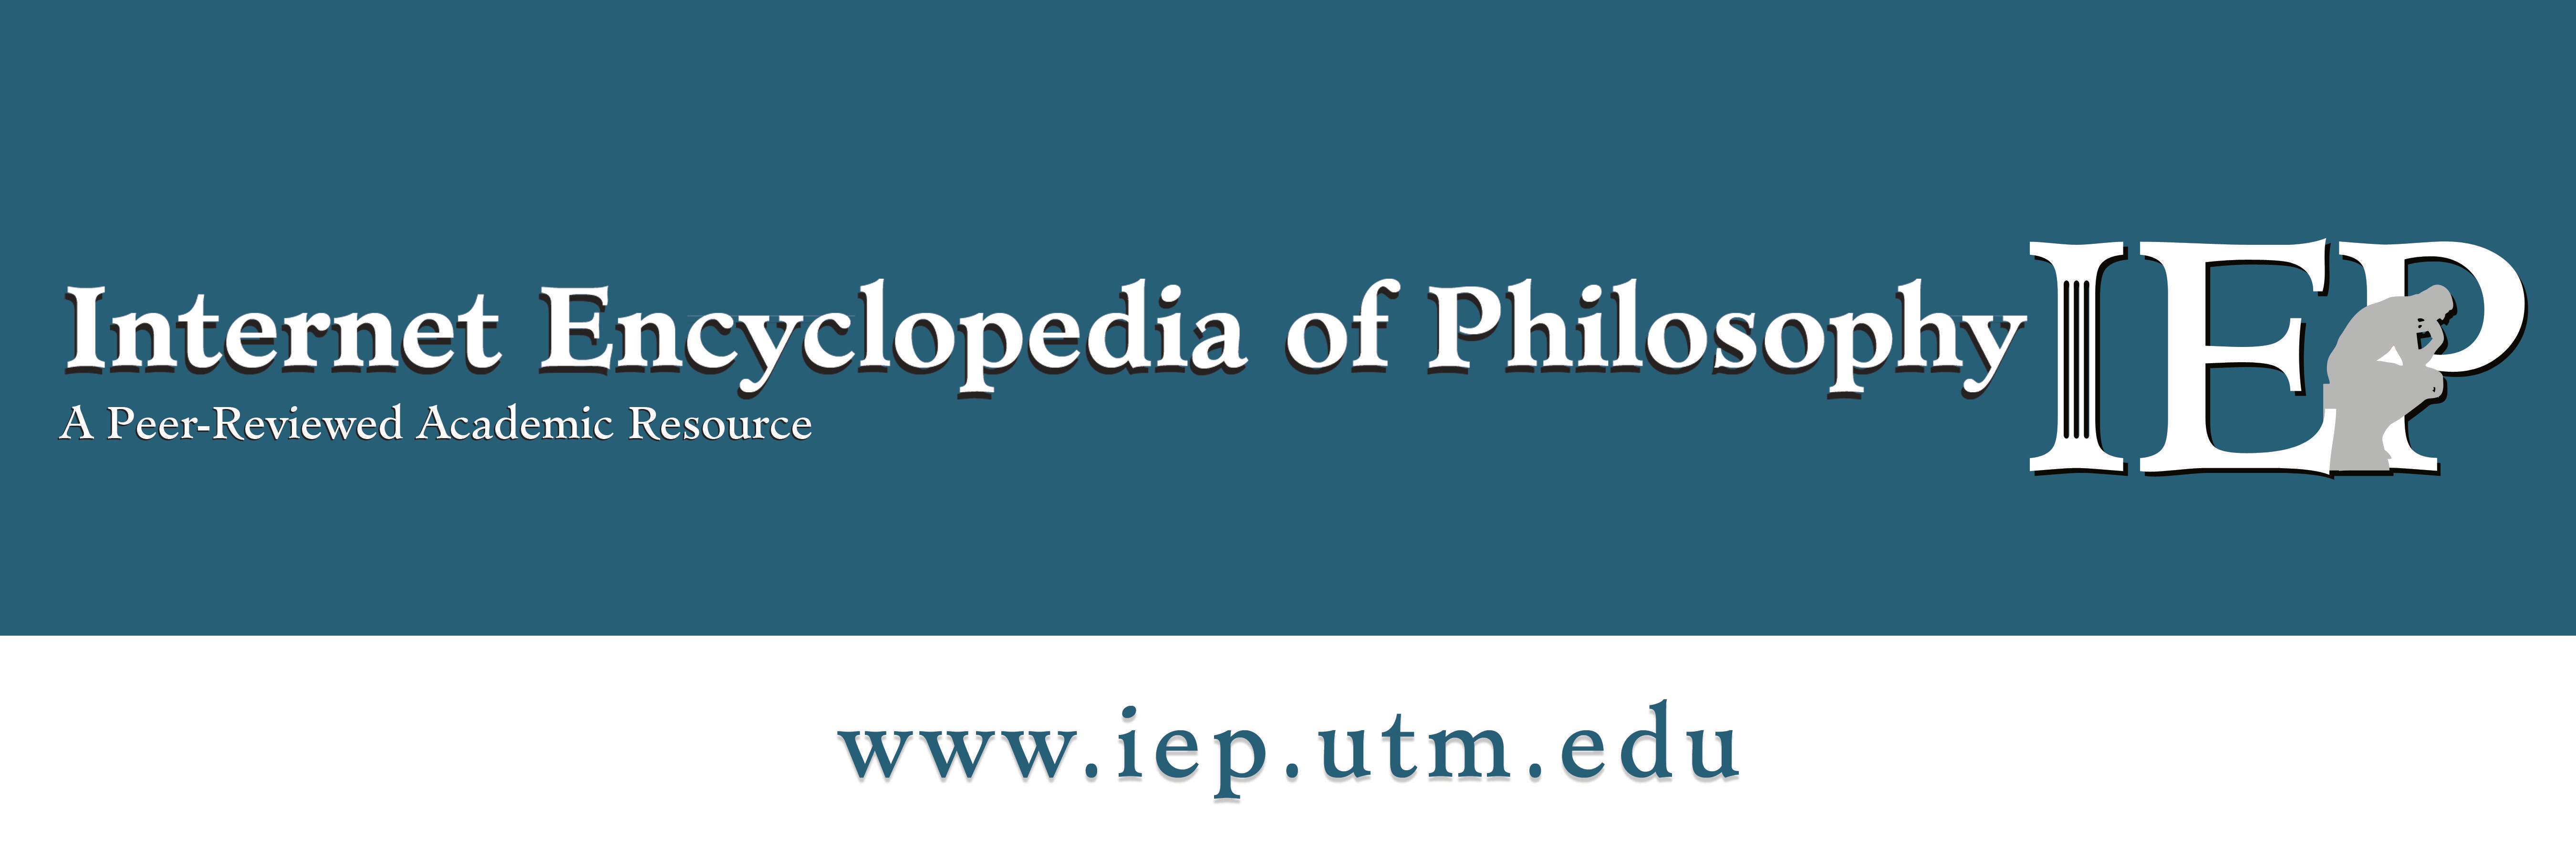 Internet Encyclopedia Logo - Banner_6_2 | Internet Encyclopedia of Philosophy